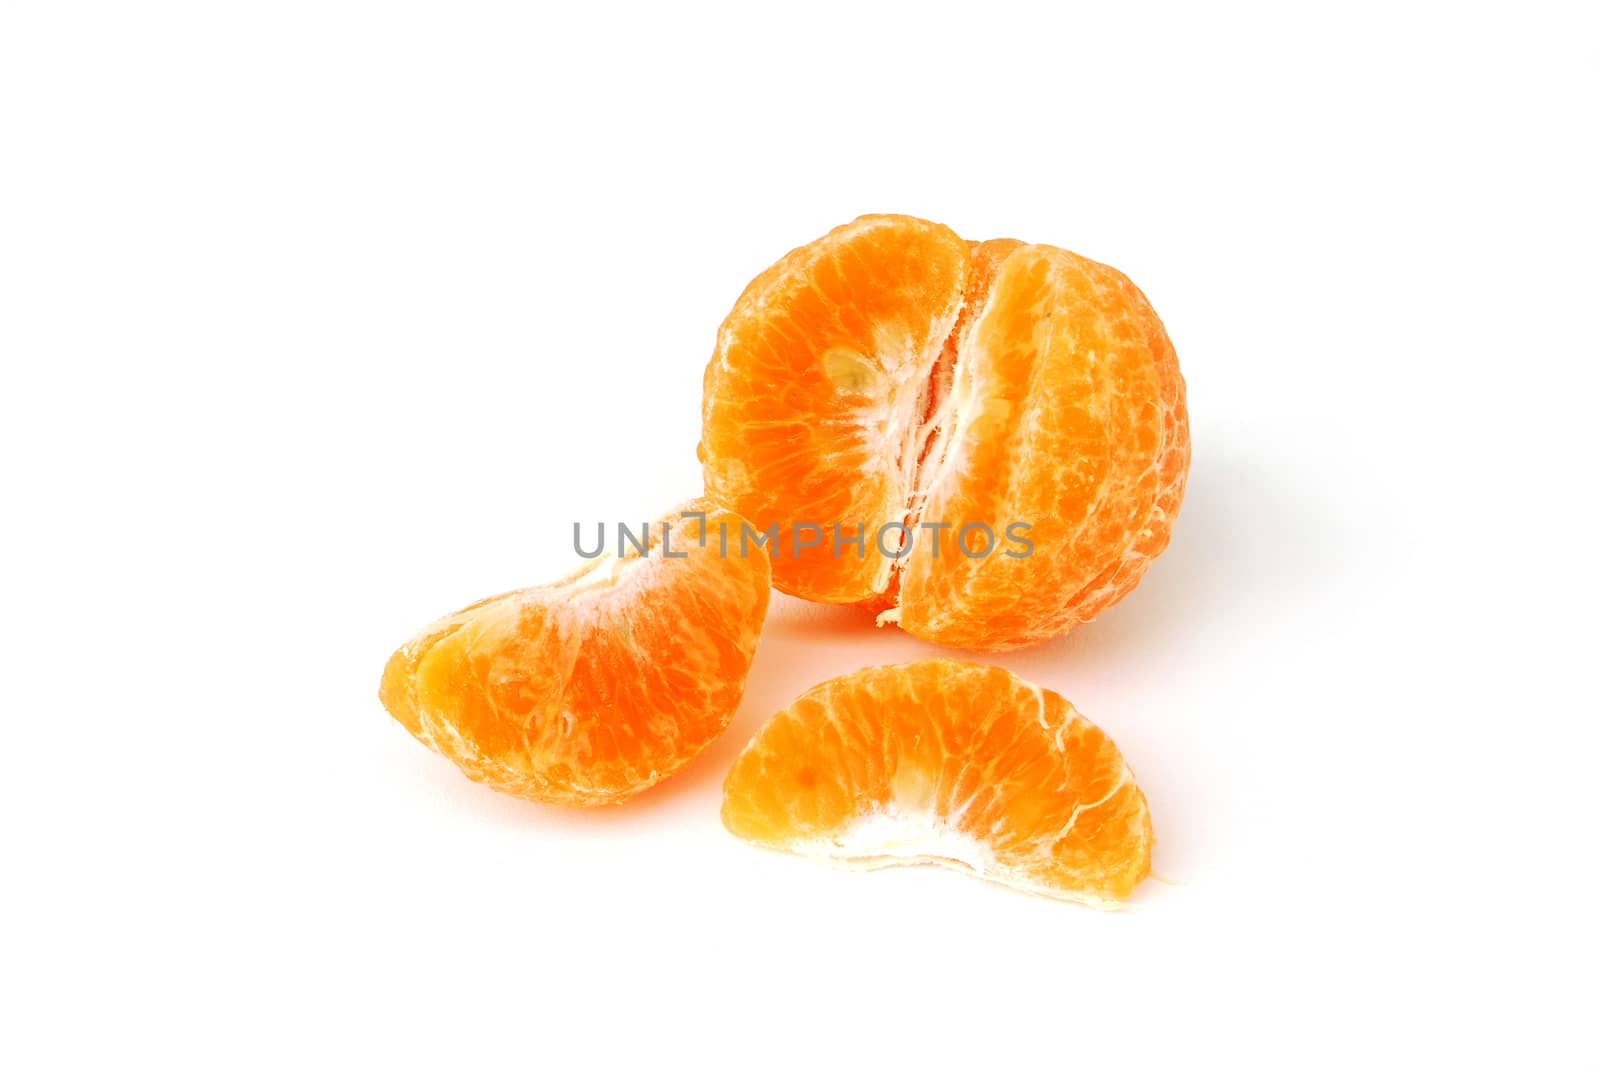 Orange meat on white background.  Orange repair the worn parts.